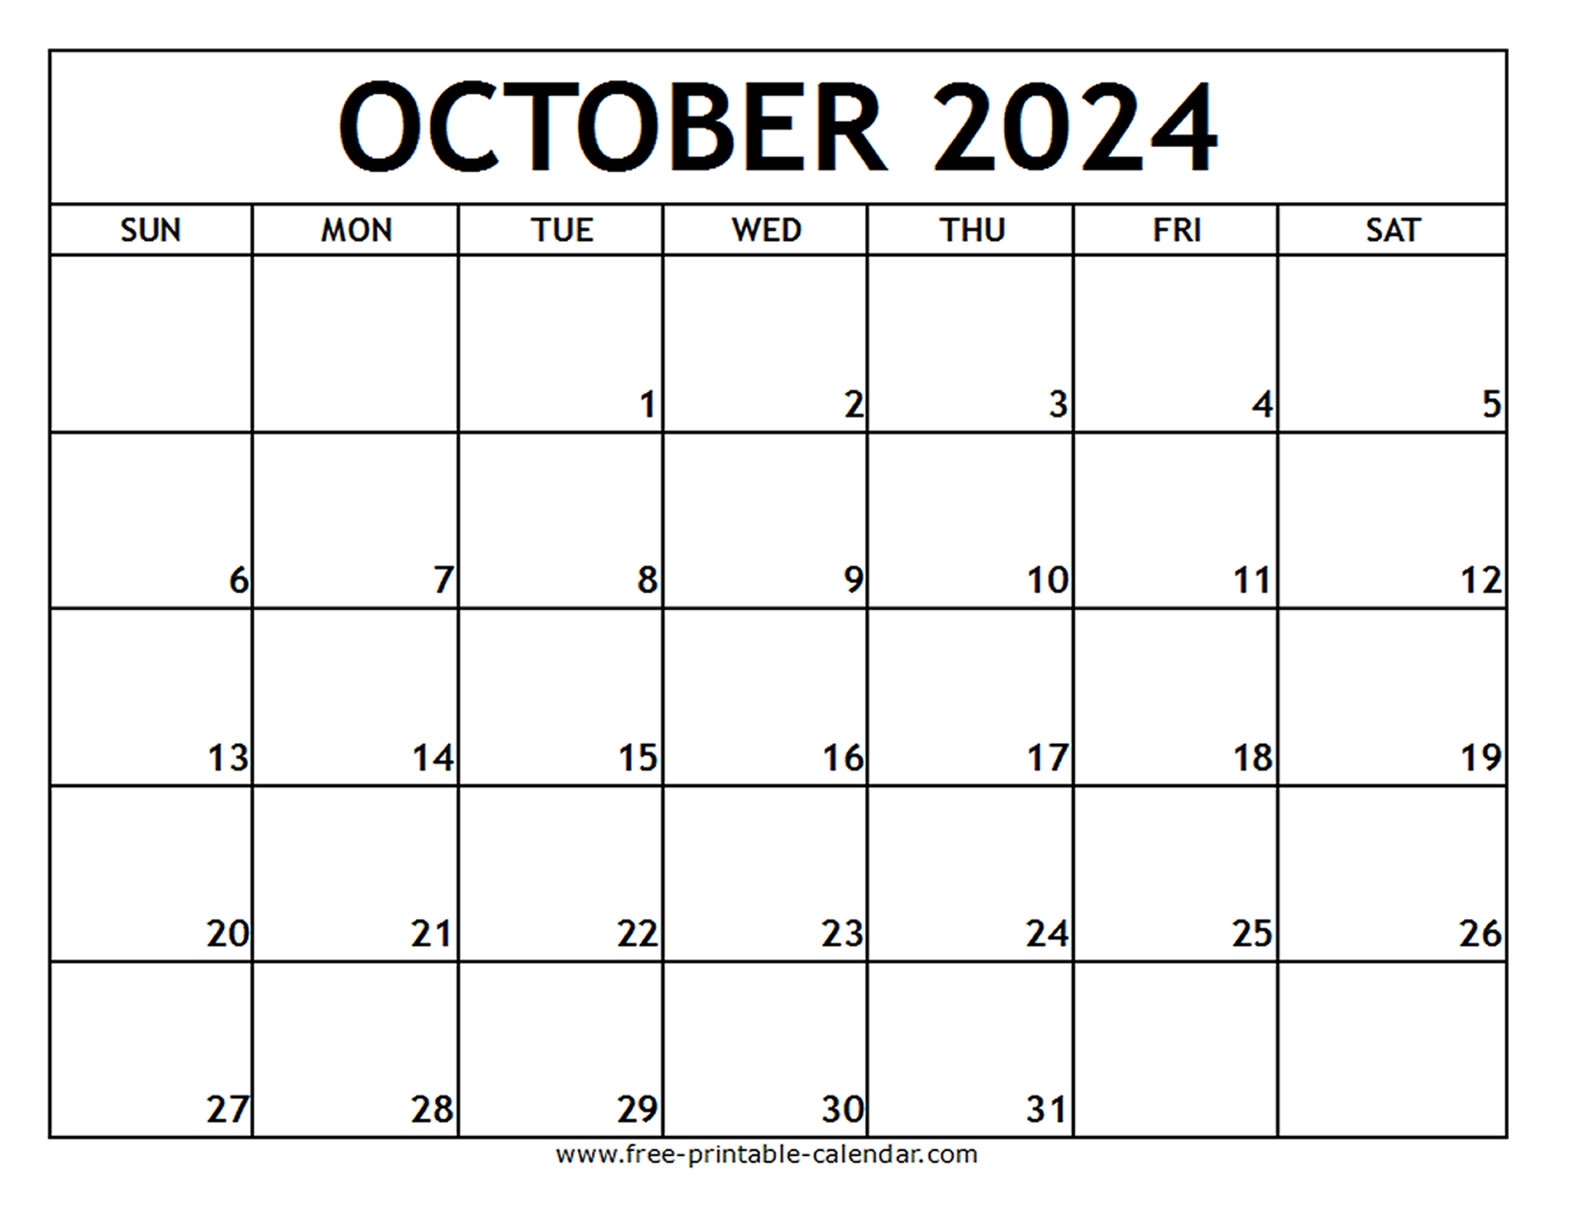 October 2024 Printable Calendar - Free-Printable-Calendar with Free Printable Calendar 2024 October And November